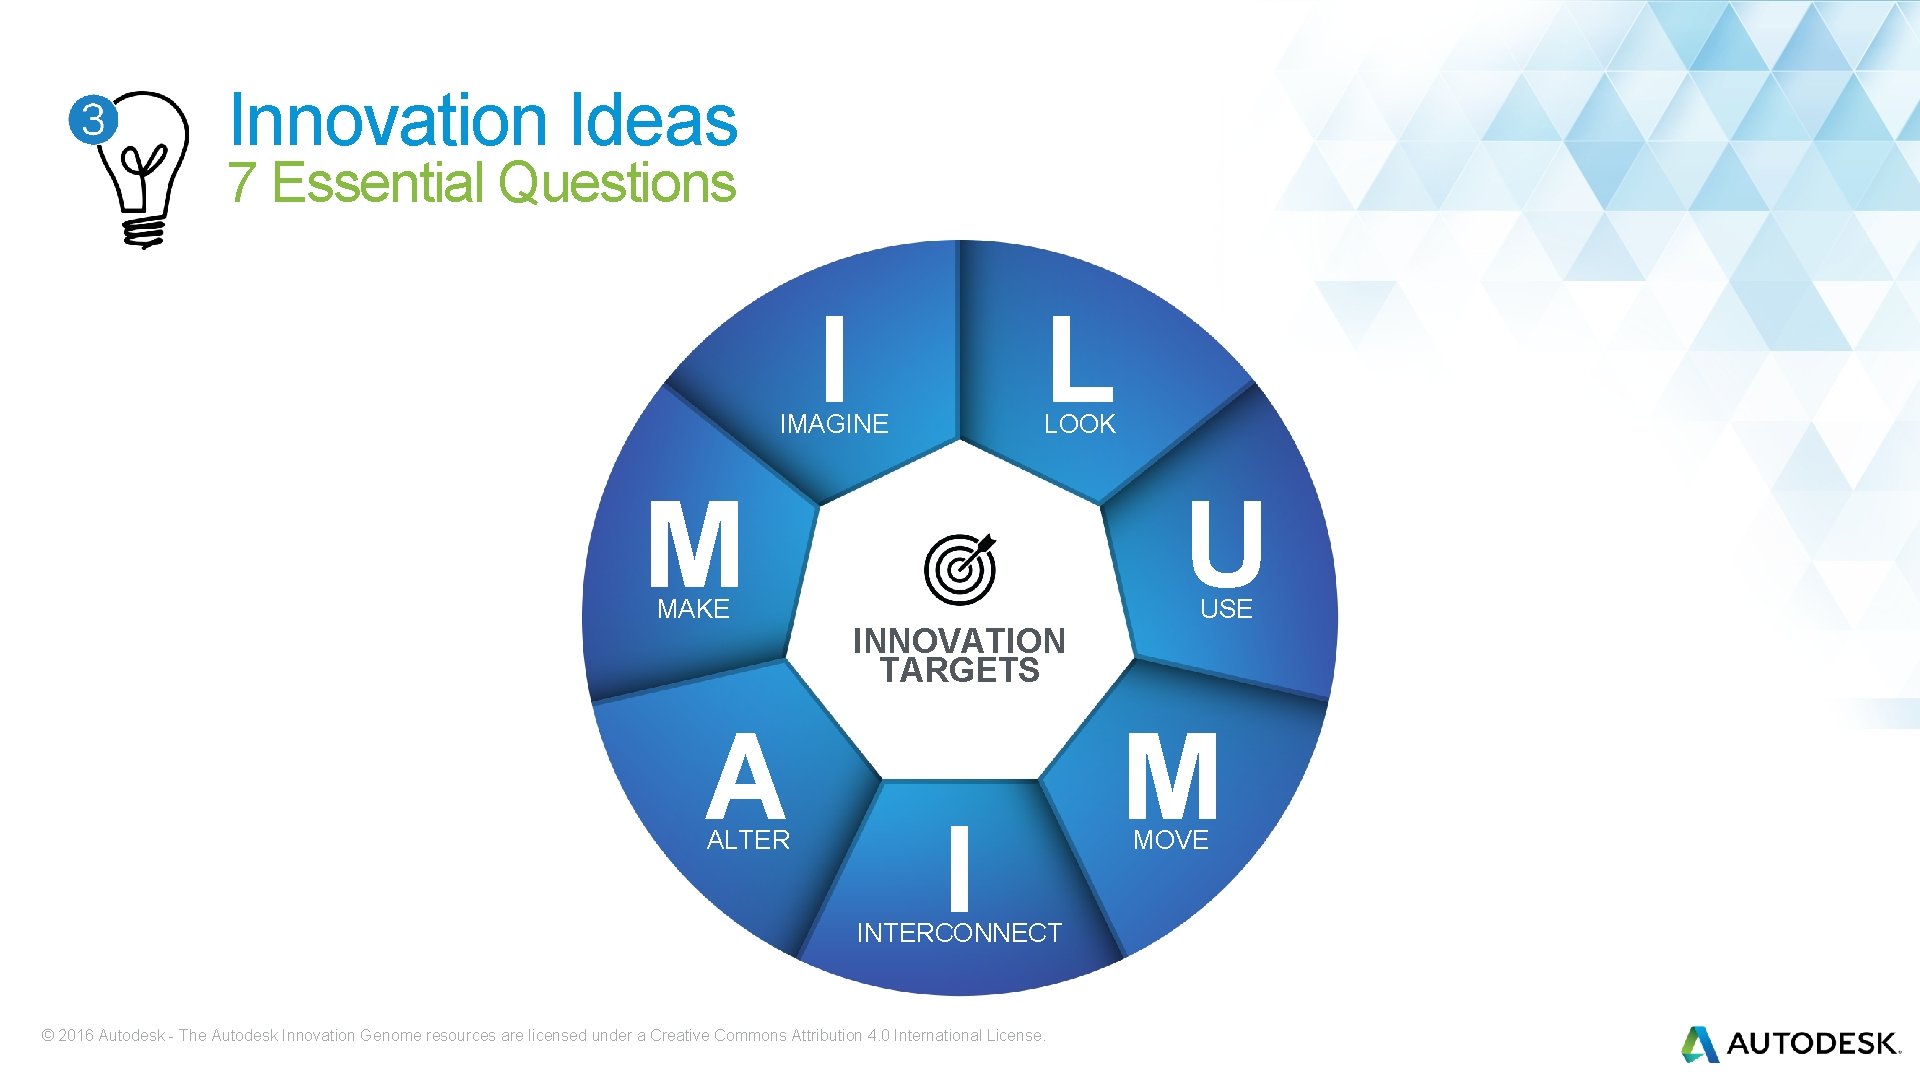 Innovation Ideas 7 Essential Questions I L IMAGINE LOOK M MAKE A ALTER U